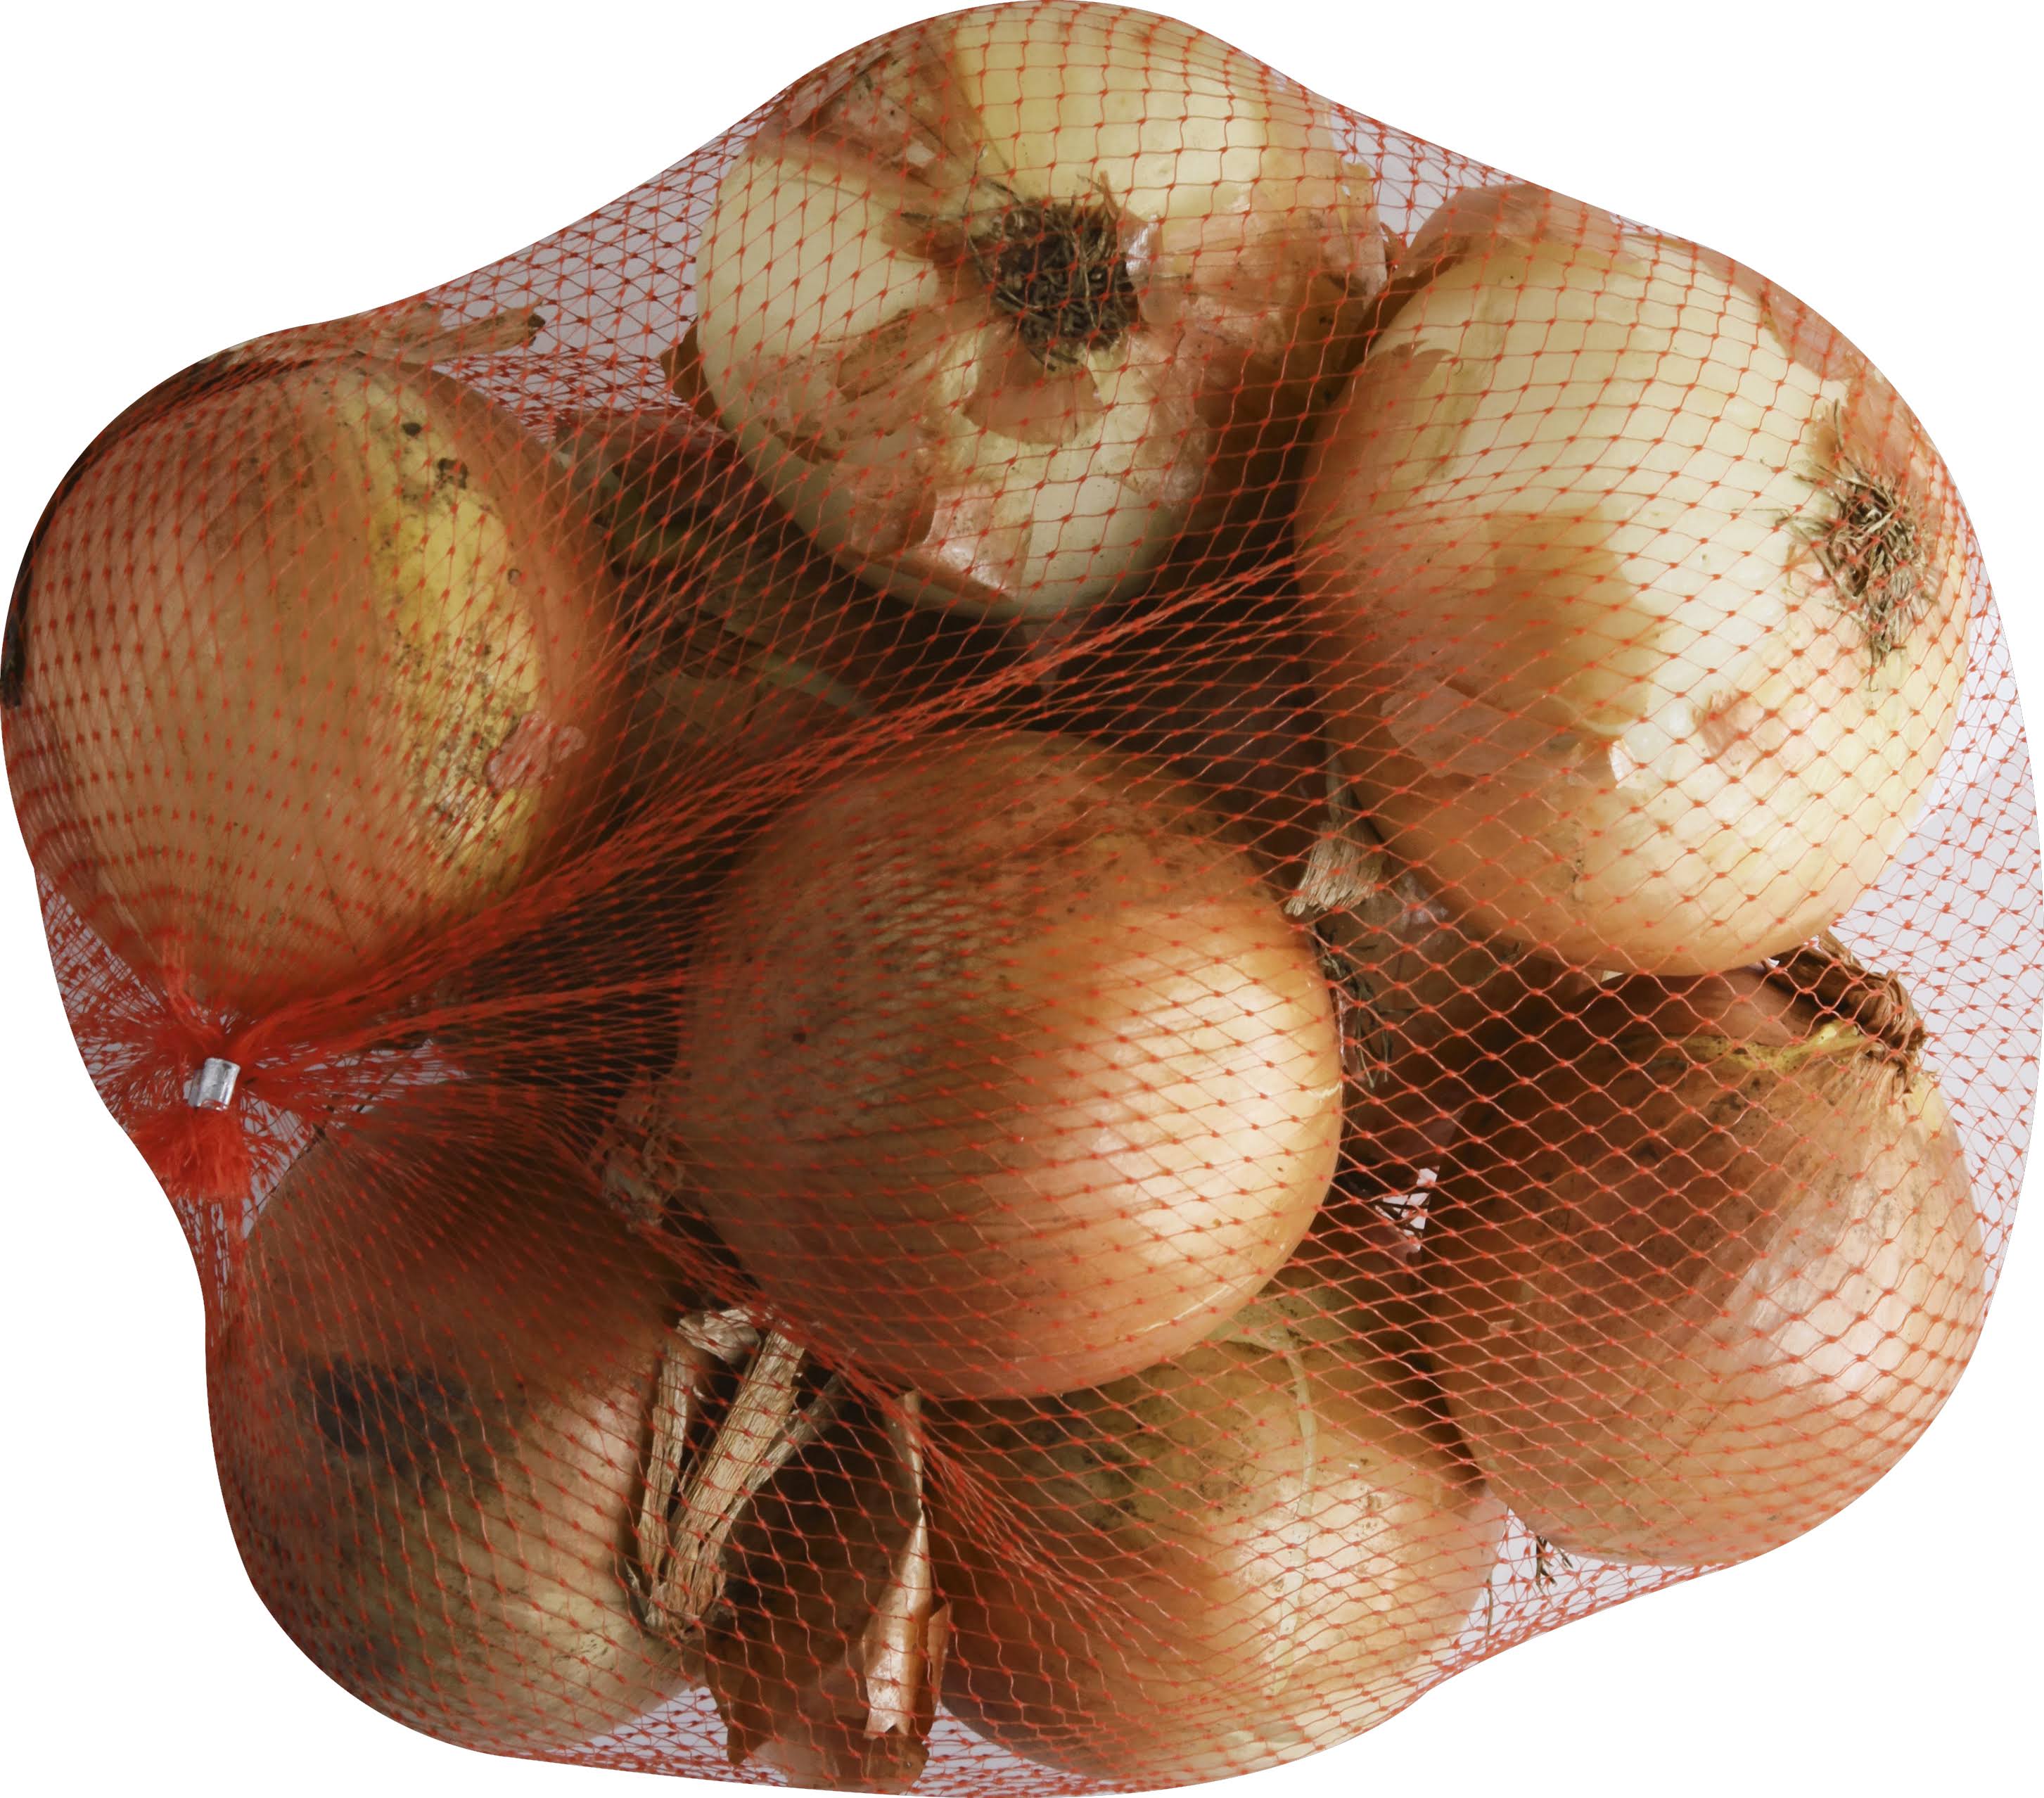 Yellow Onions - 3 lb bag